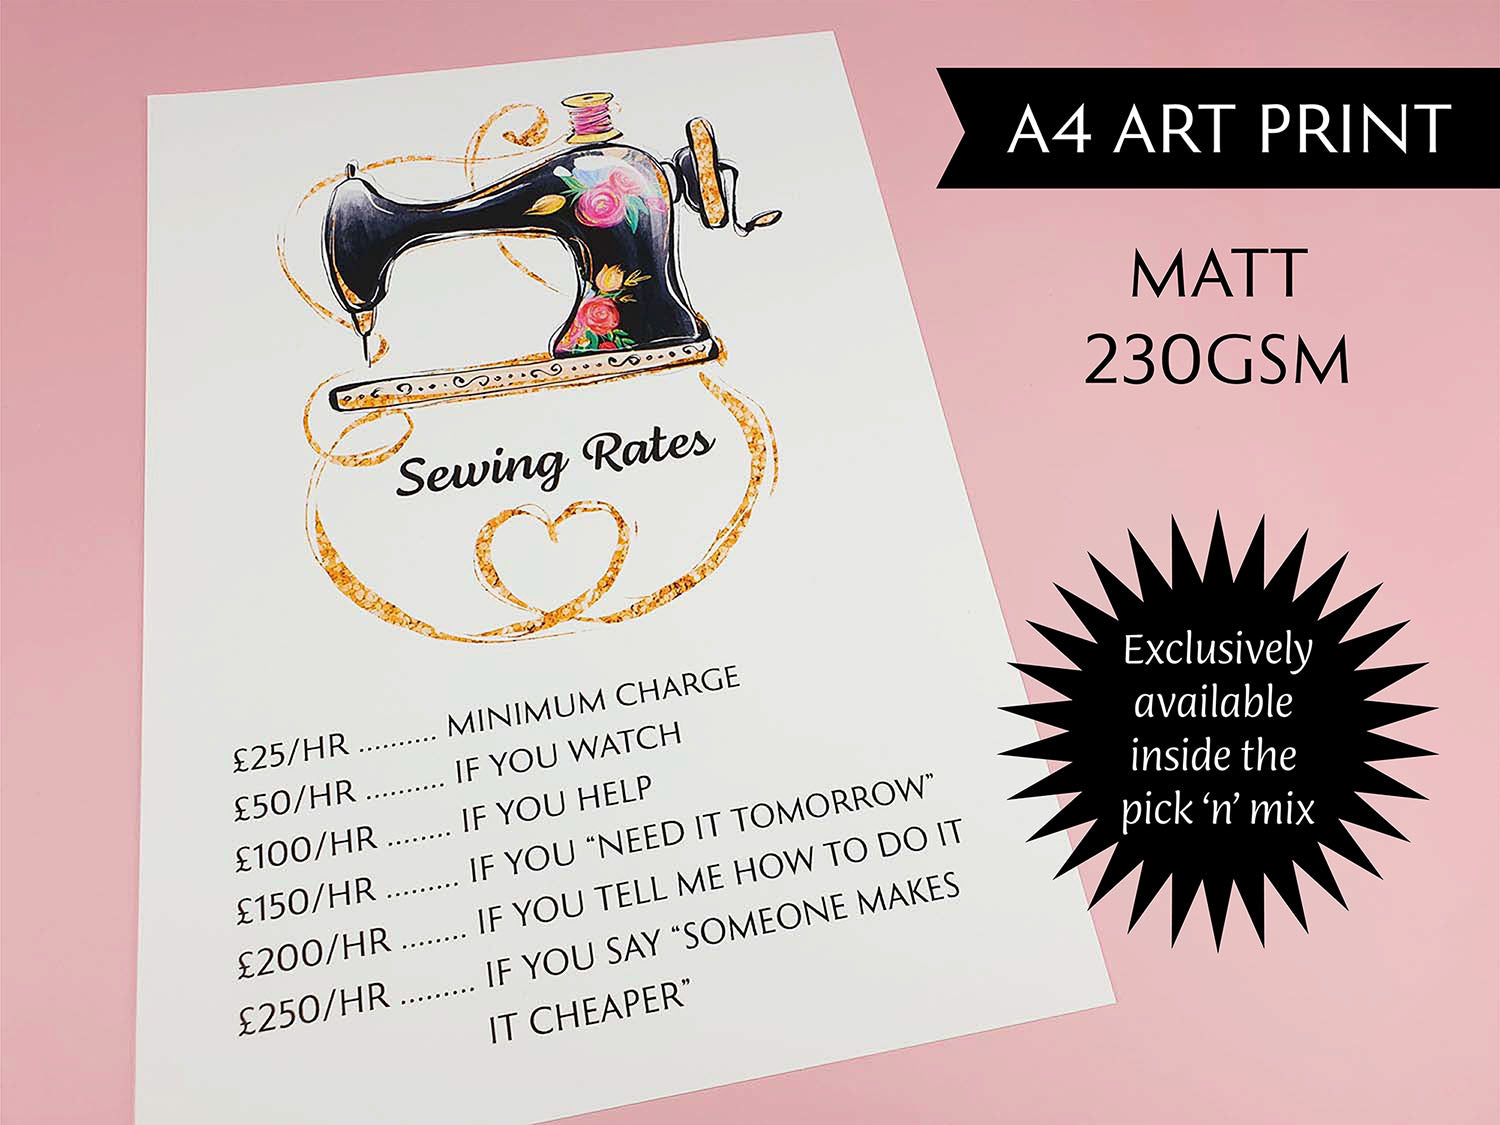 Sewing rates A4 art print